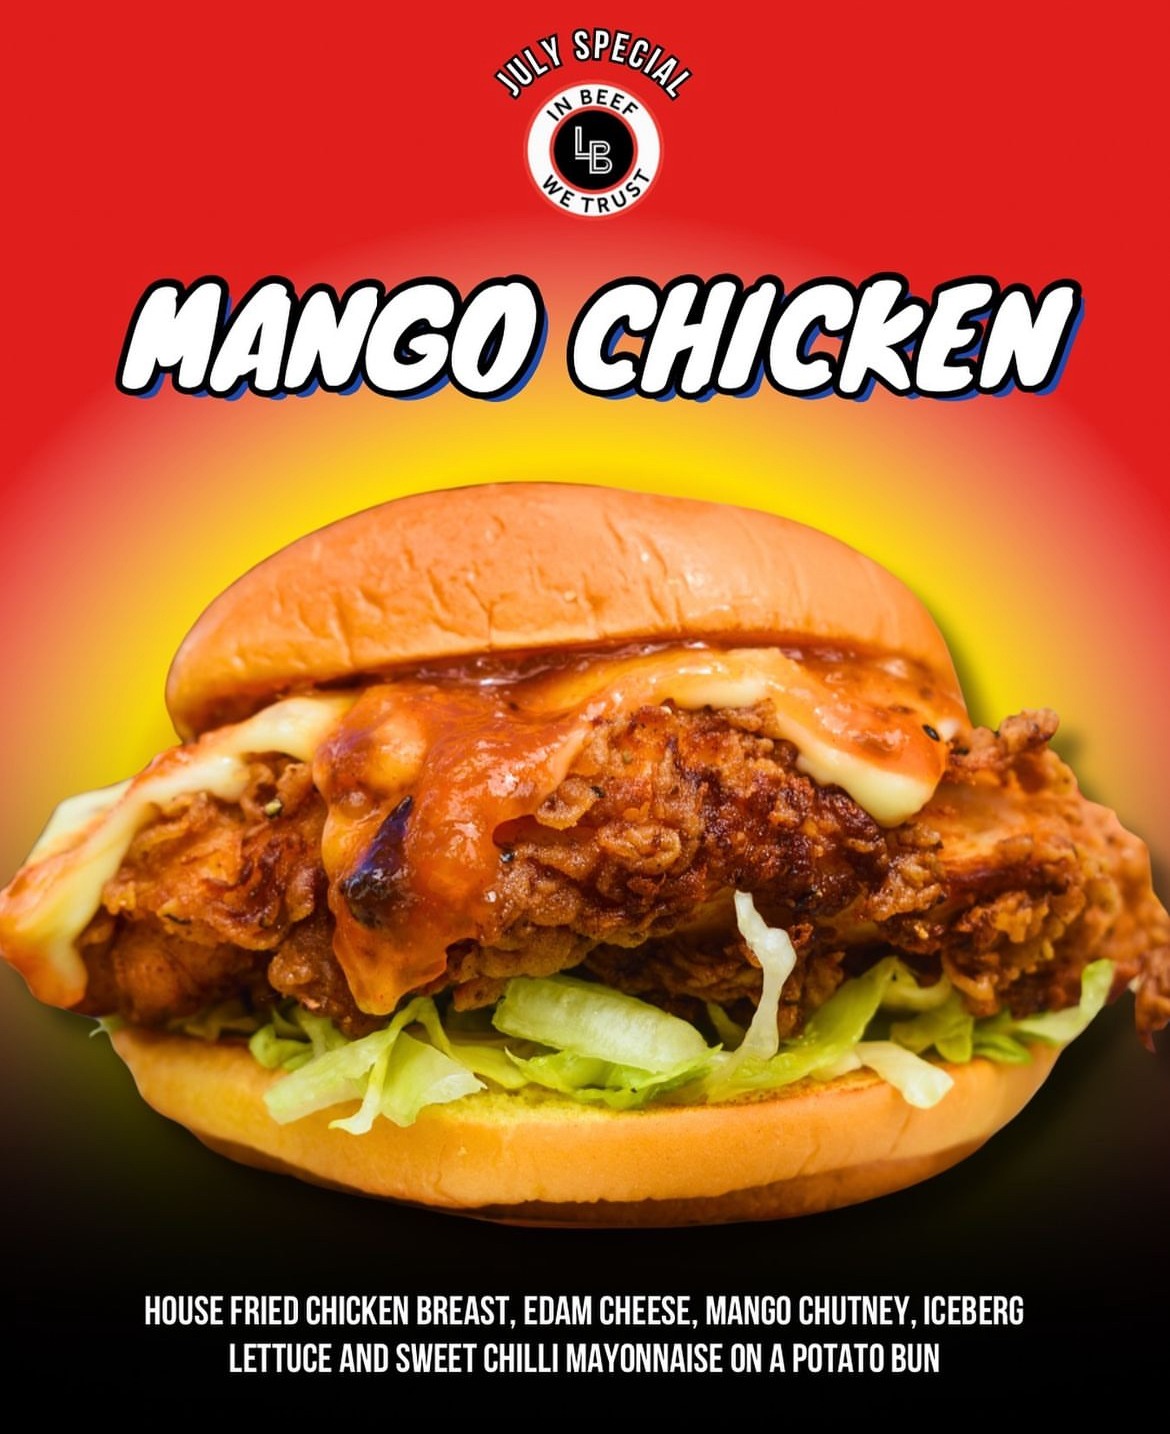 SPECIAL - The Mango Chicken